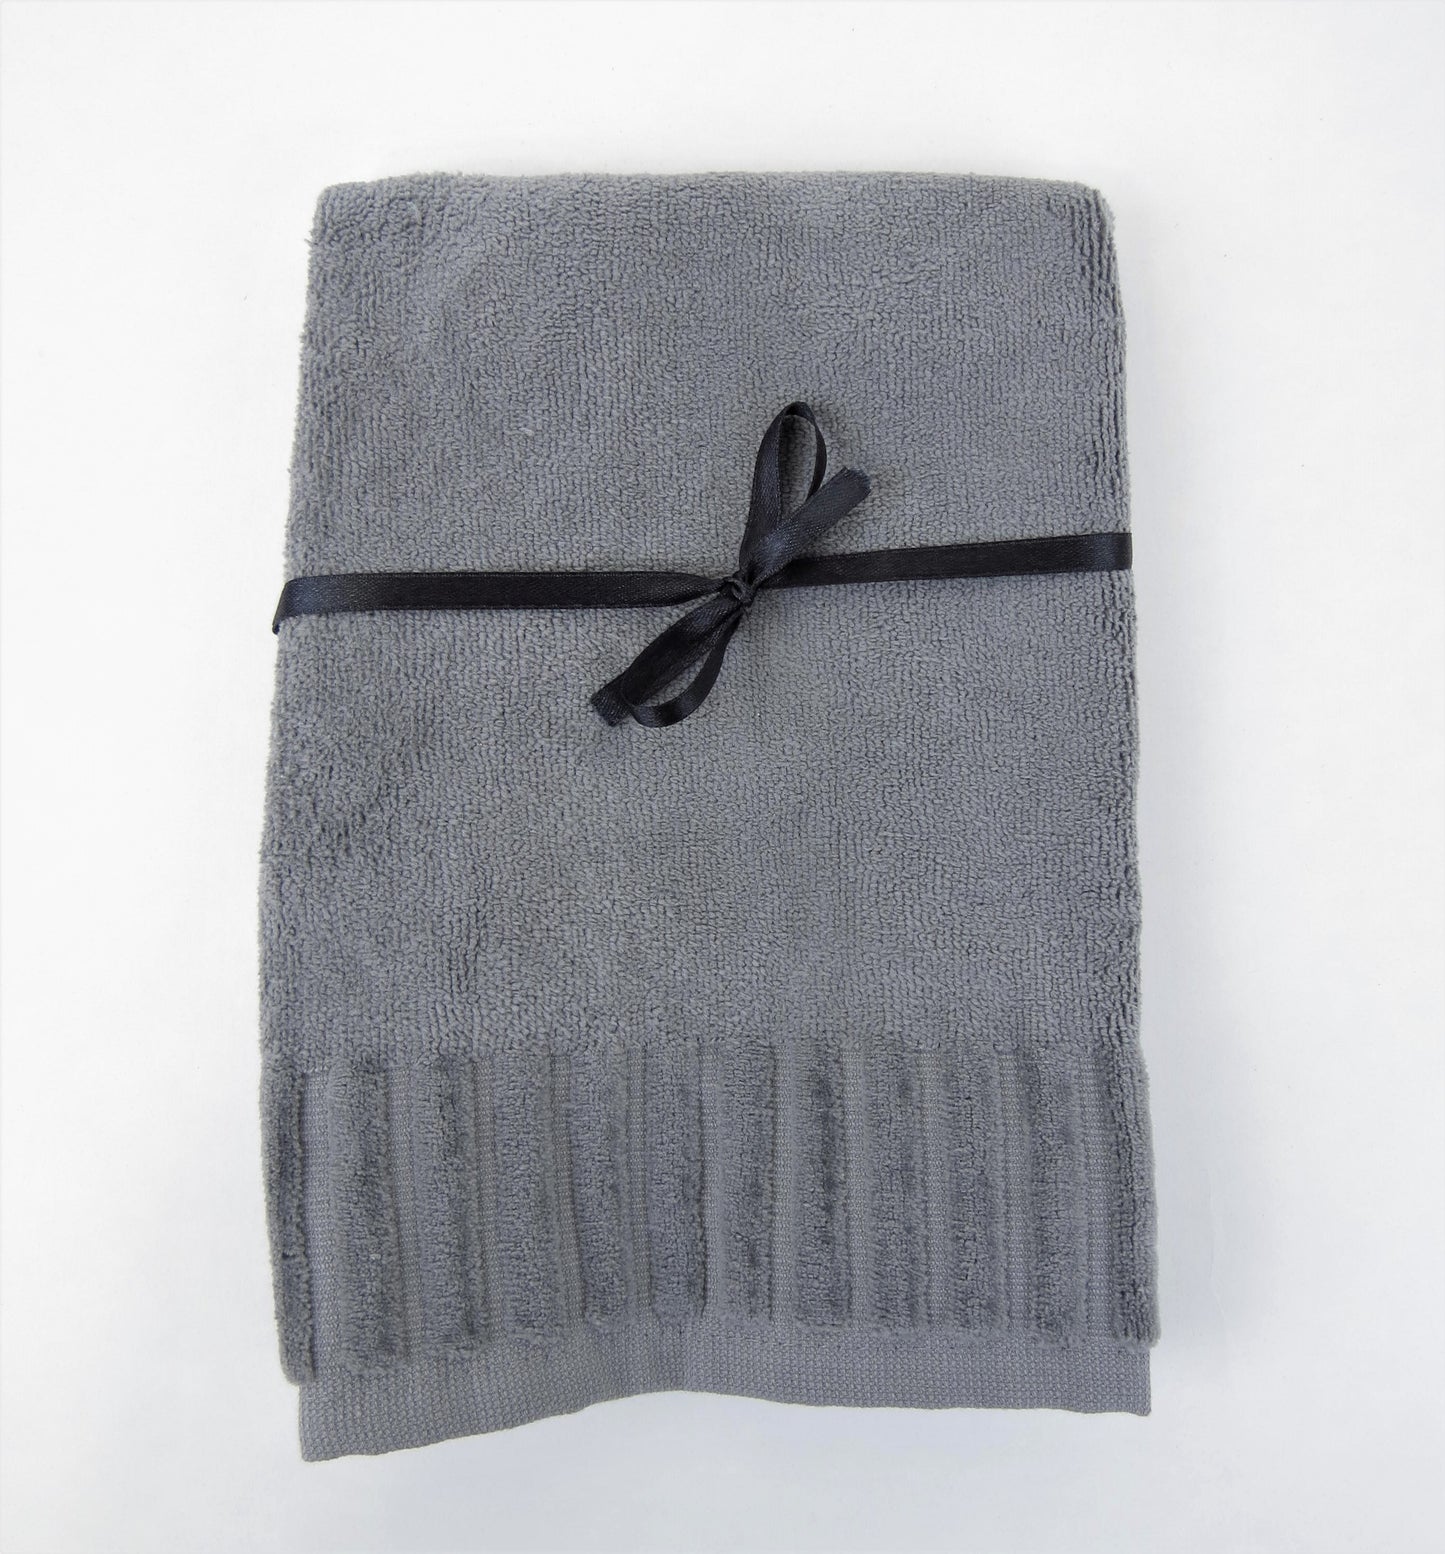 Shop Fingertip Towels from Starbox Gifts. Monogrammed fingertip towels